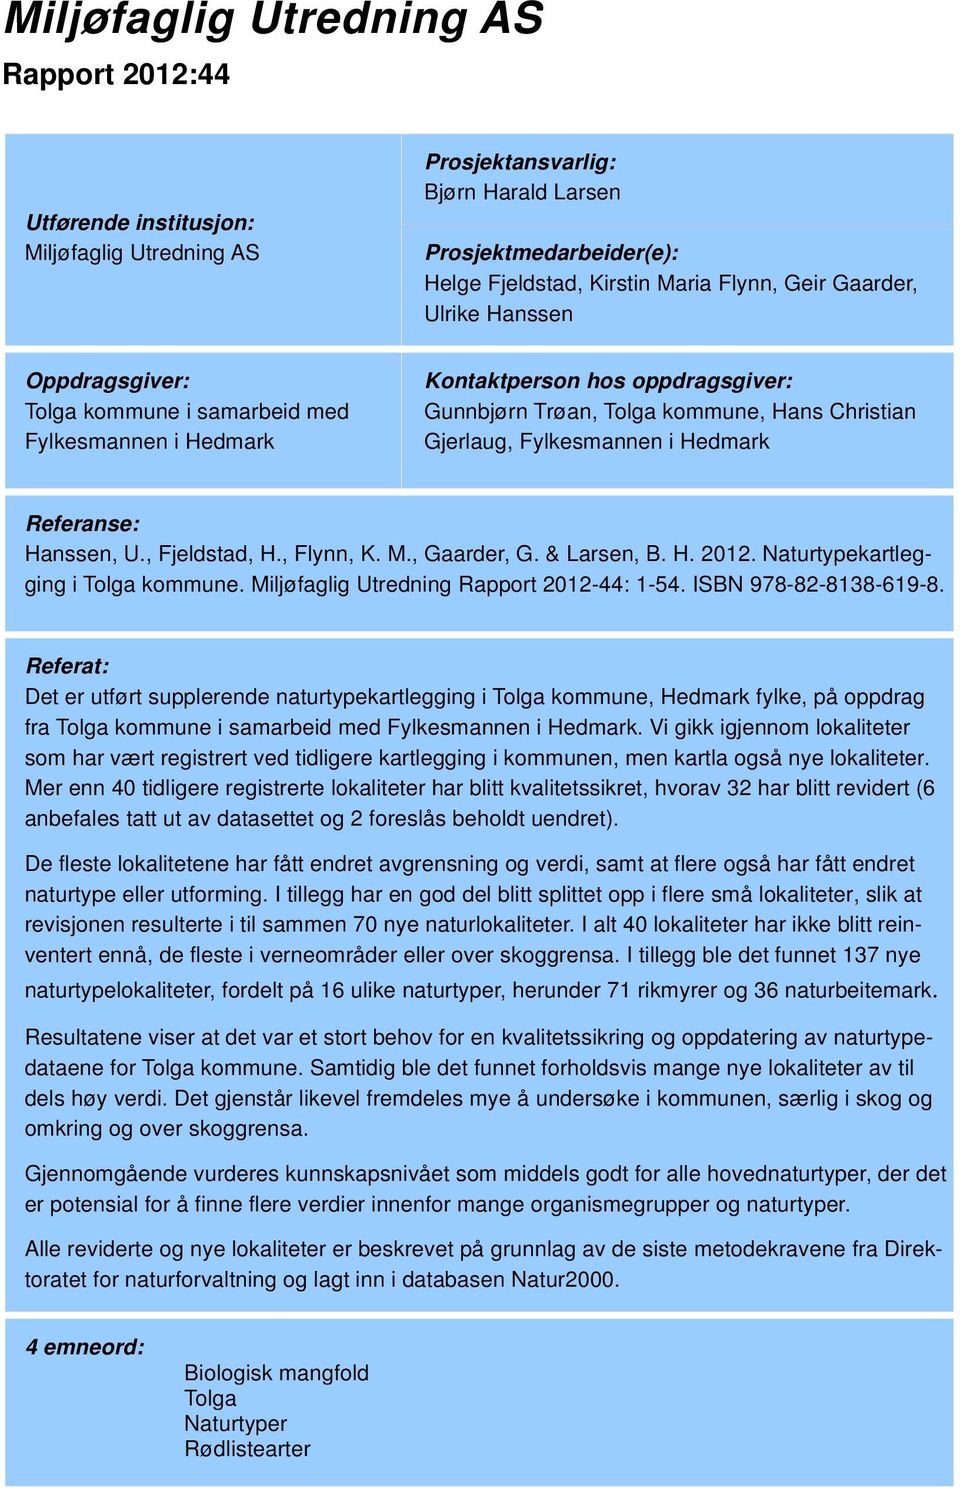 M., Gaarder, G. & Larsen, B. H. 2012. Naturtypekartlegging i Tolga kommune. Miljøfaglig Utredning Rapport 2012-44: 1-54. ISBN 978-82-8138-619-8.